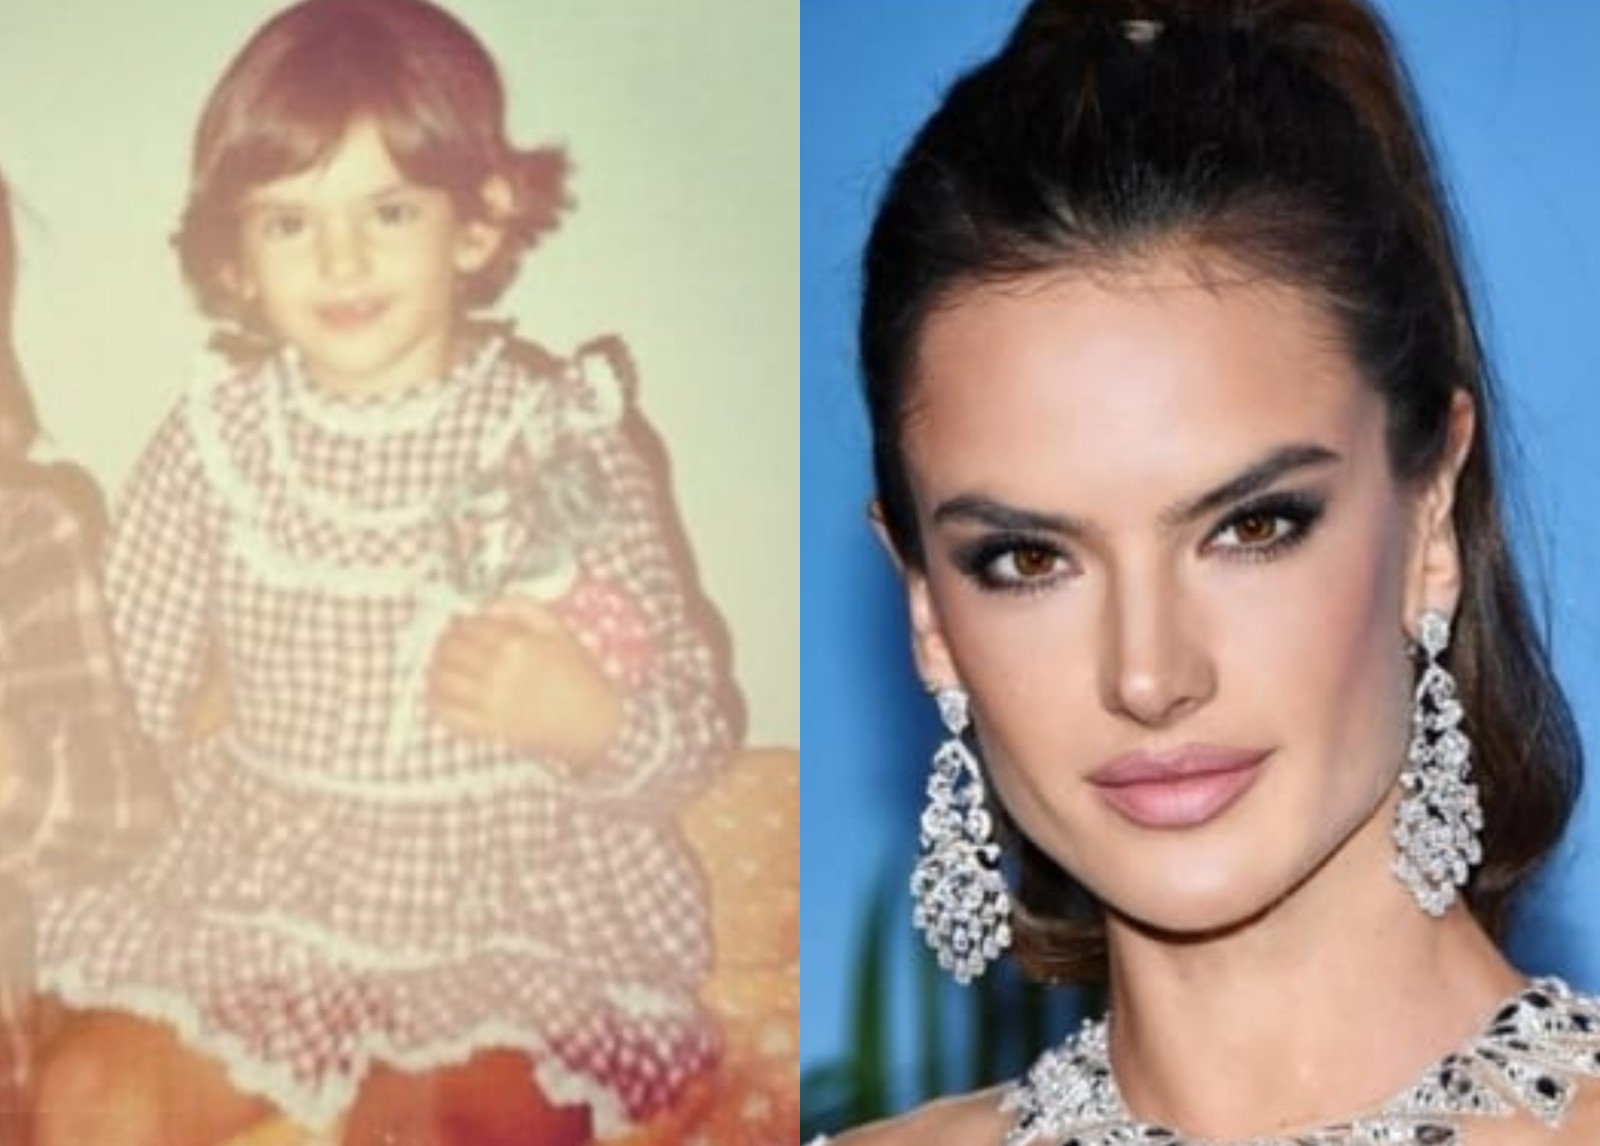 Otoplastia: antes e depois da modelo Alessandra Ambrosio